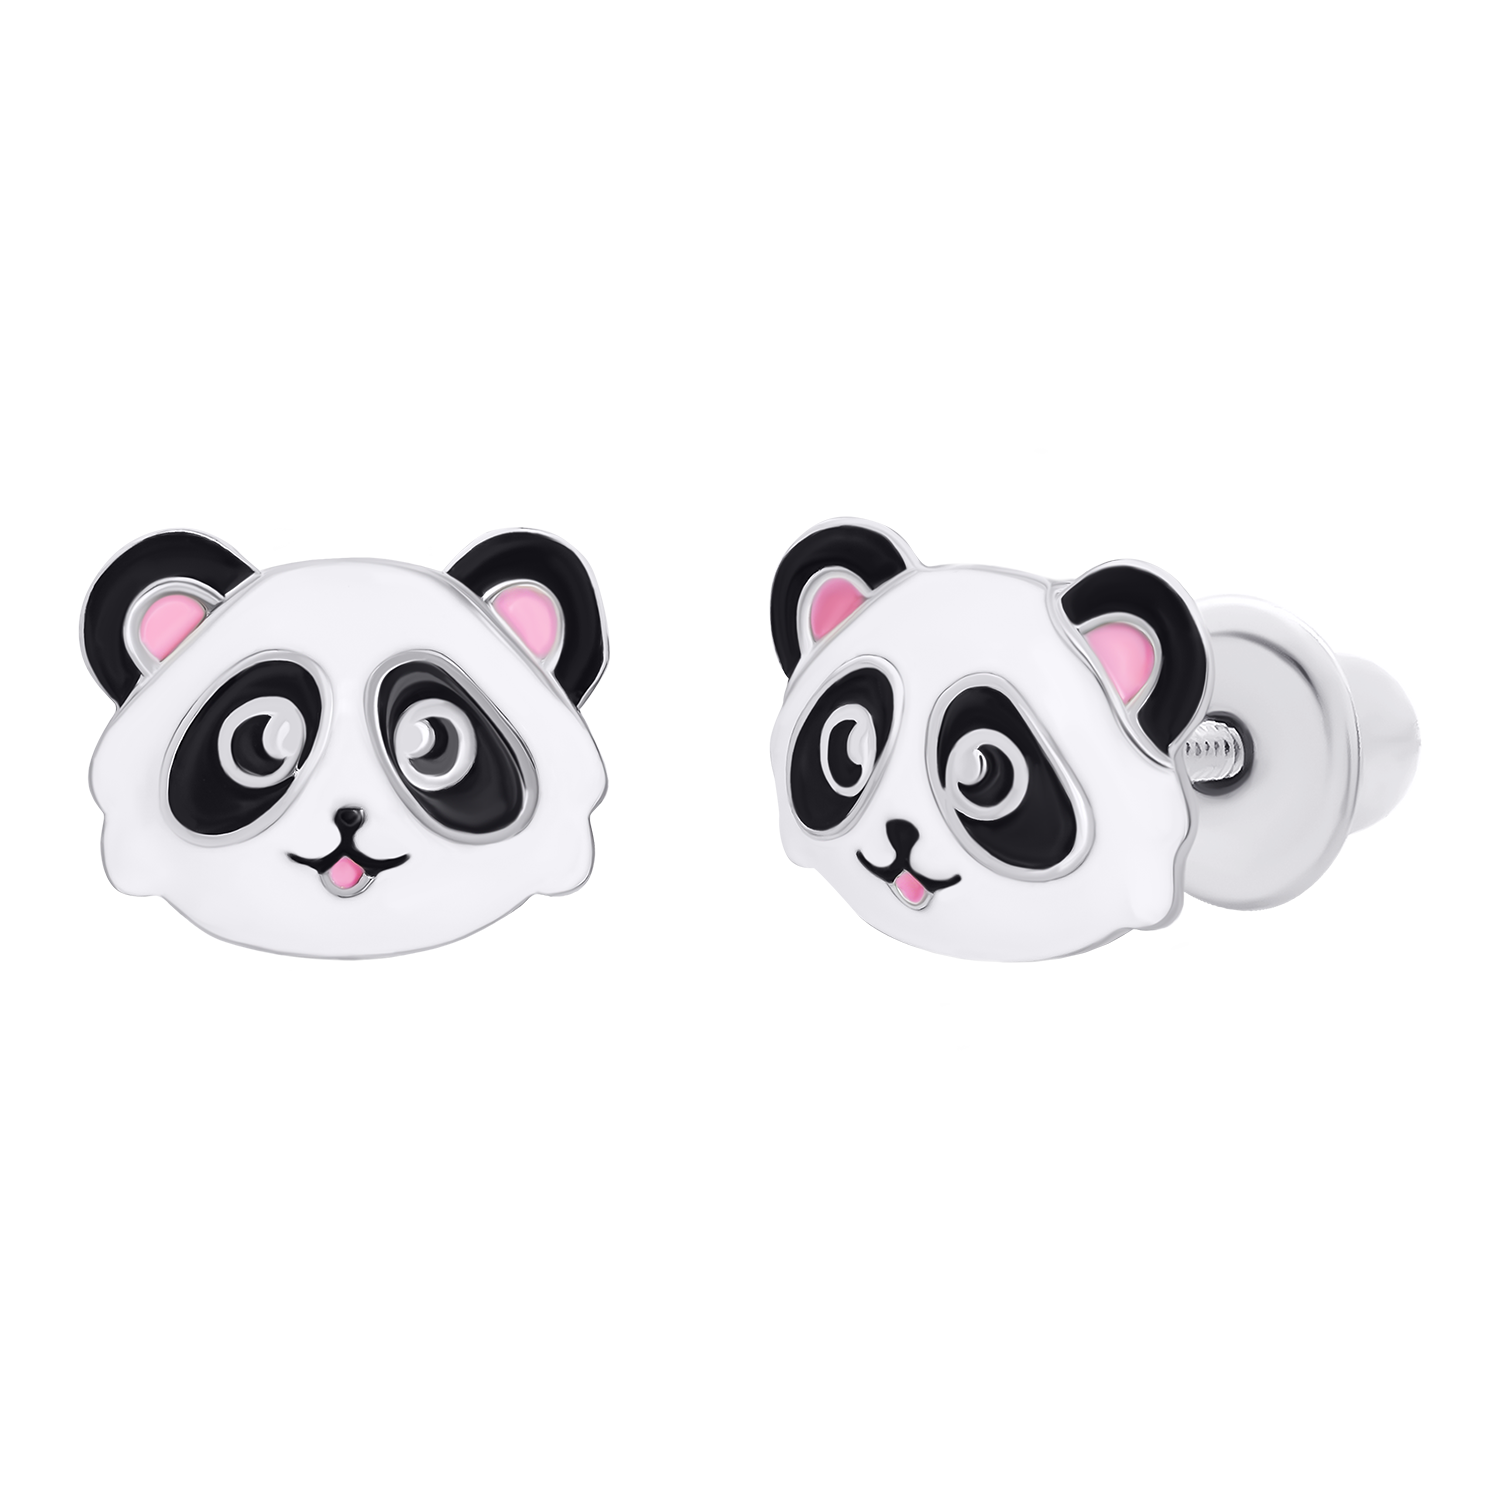 Stud earrings Panda with white-black and pink enamel